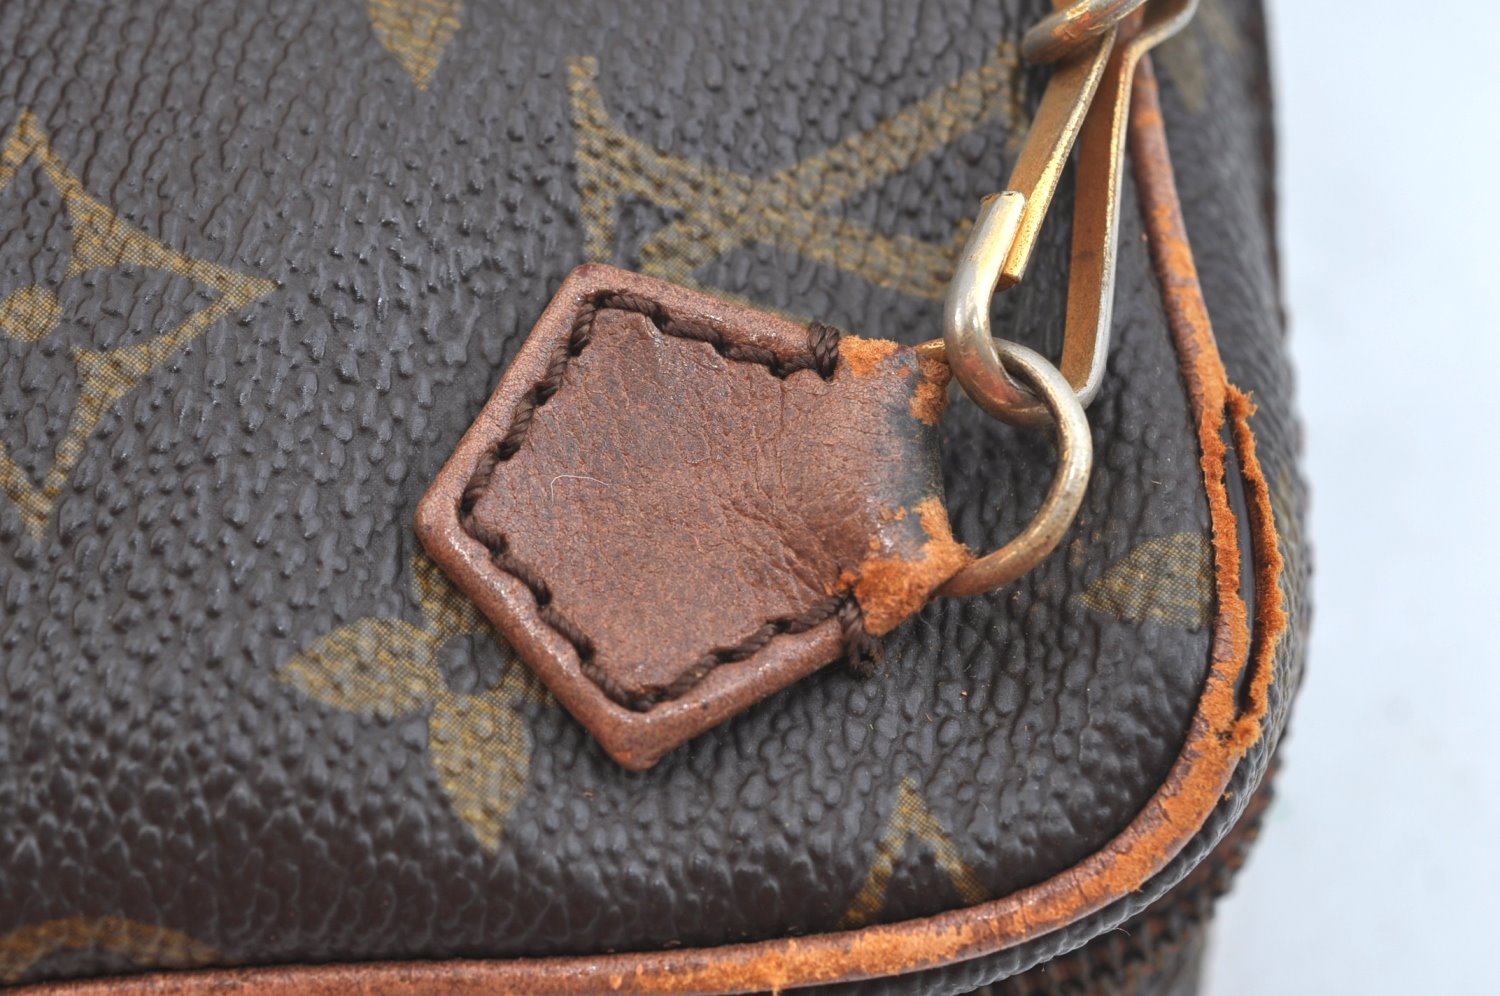 Authentic Louis Vuitton Monogram Danube Shoulder Cross Bag Old Model Junk K9726